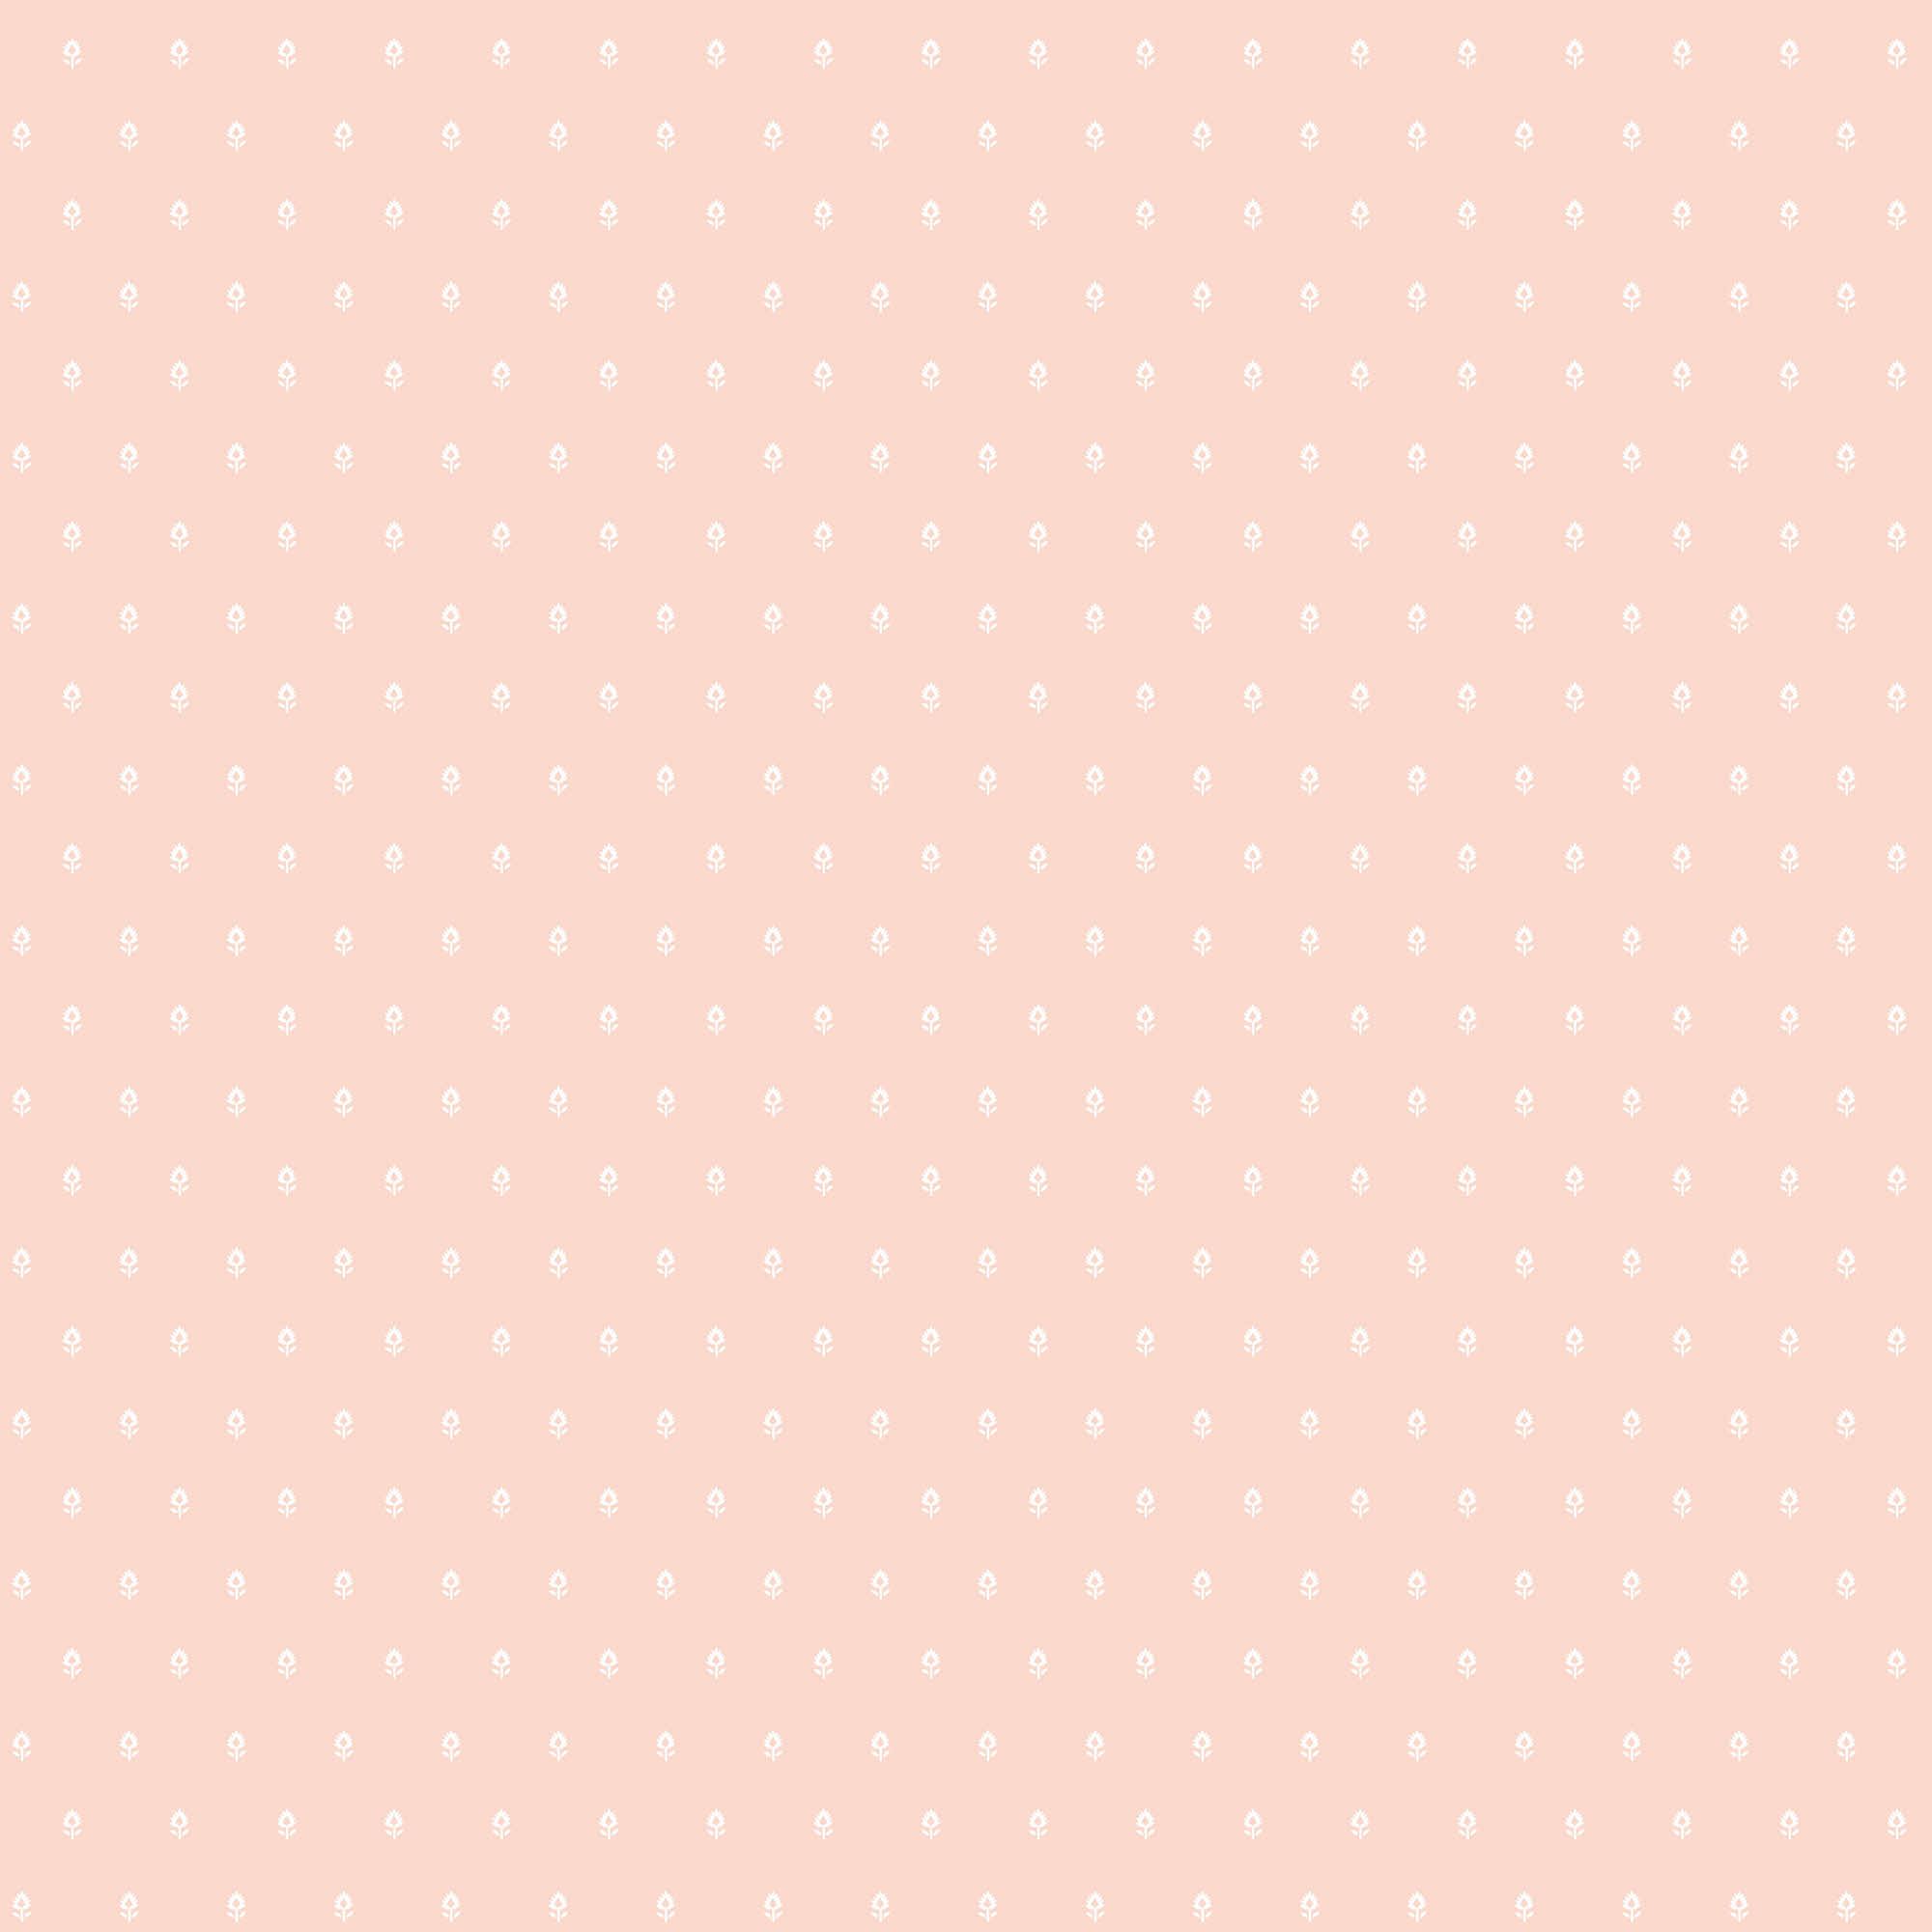 Tiny Block Print Wallpaper - Removable / Sample / Pink